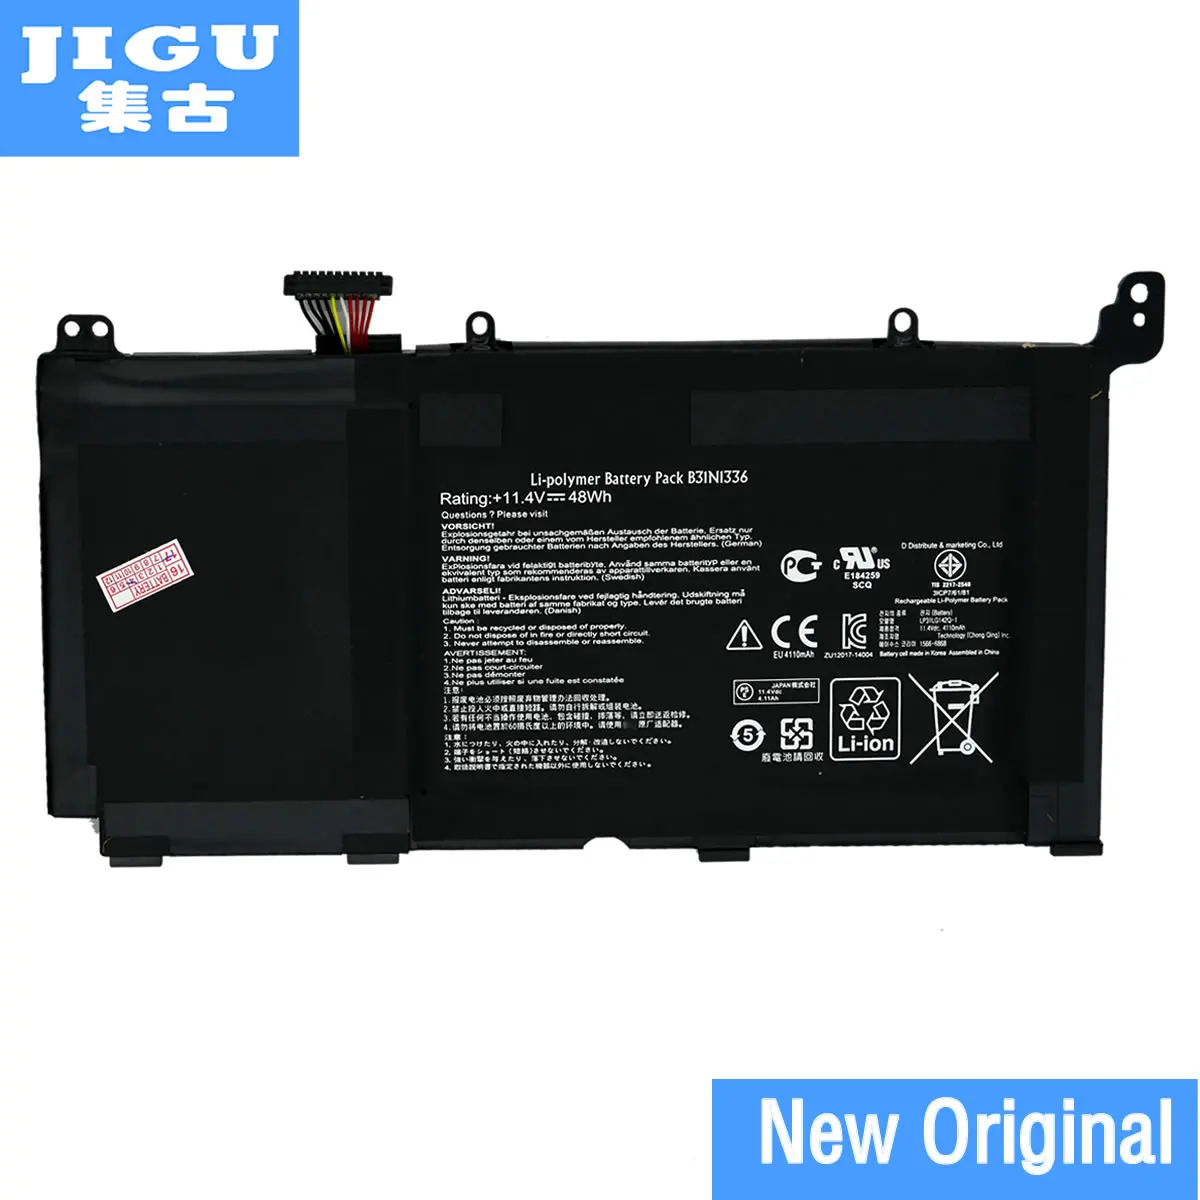 

JIGU Original laptop Battery B31N1336 For ASUS VivoBook S551 S55IL S551LN-1A 11.4V 48WH B31N1336 BATTERIES